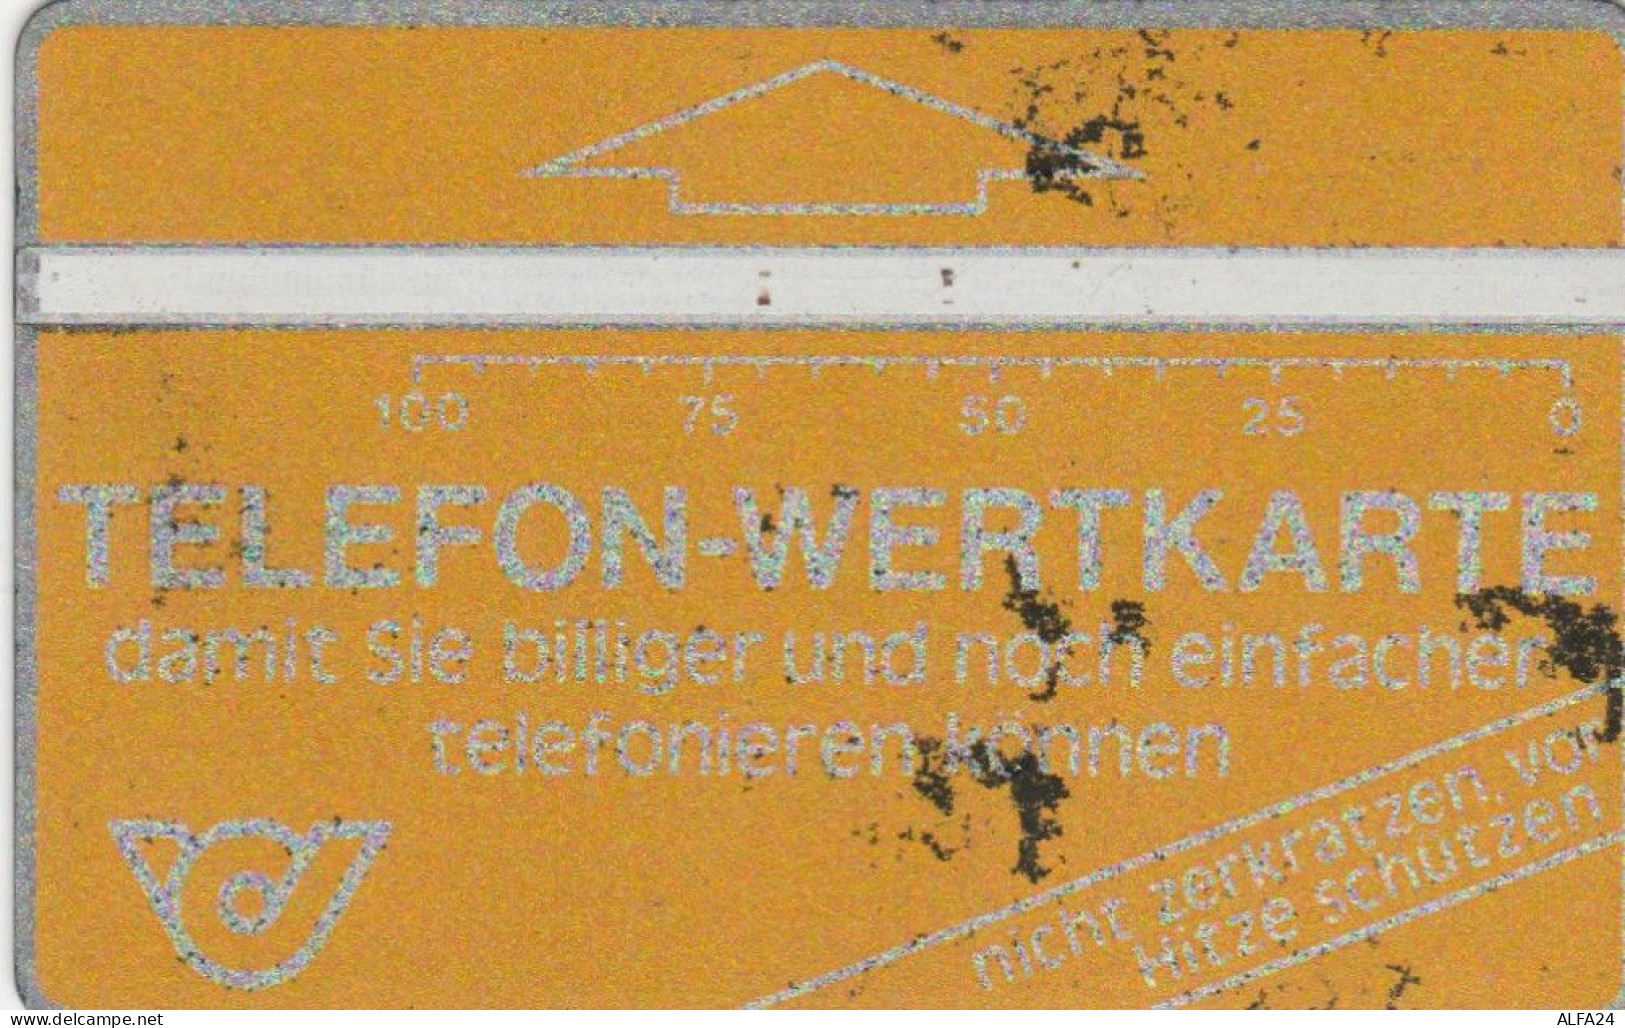 PHONE CARD AUSTRIA (E54.22.1 - Austria